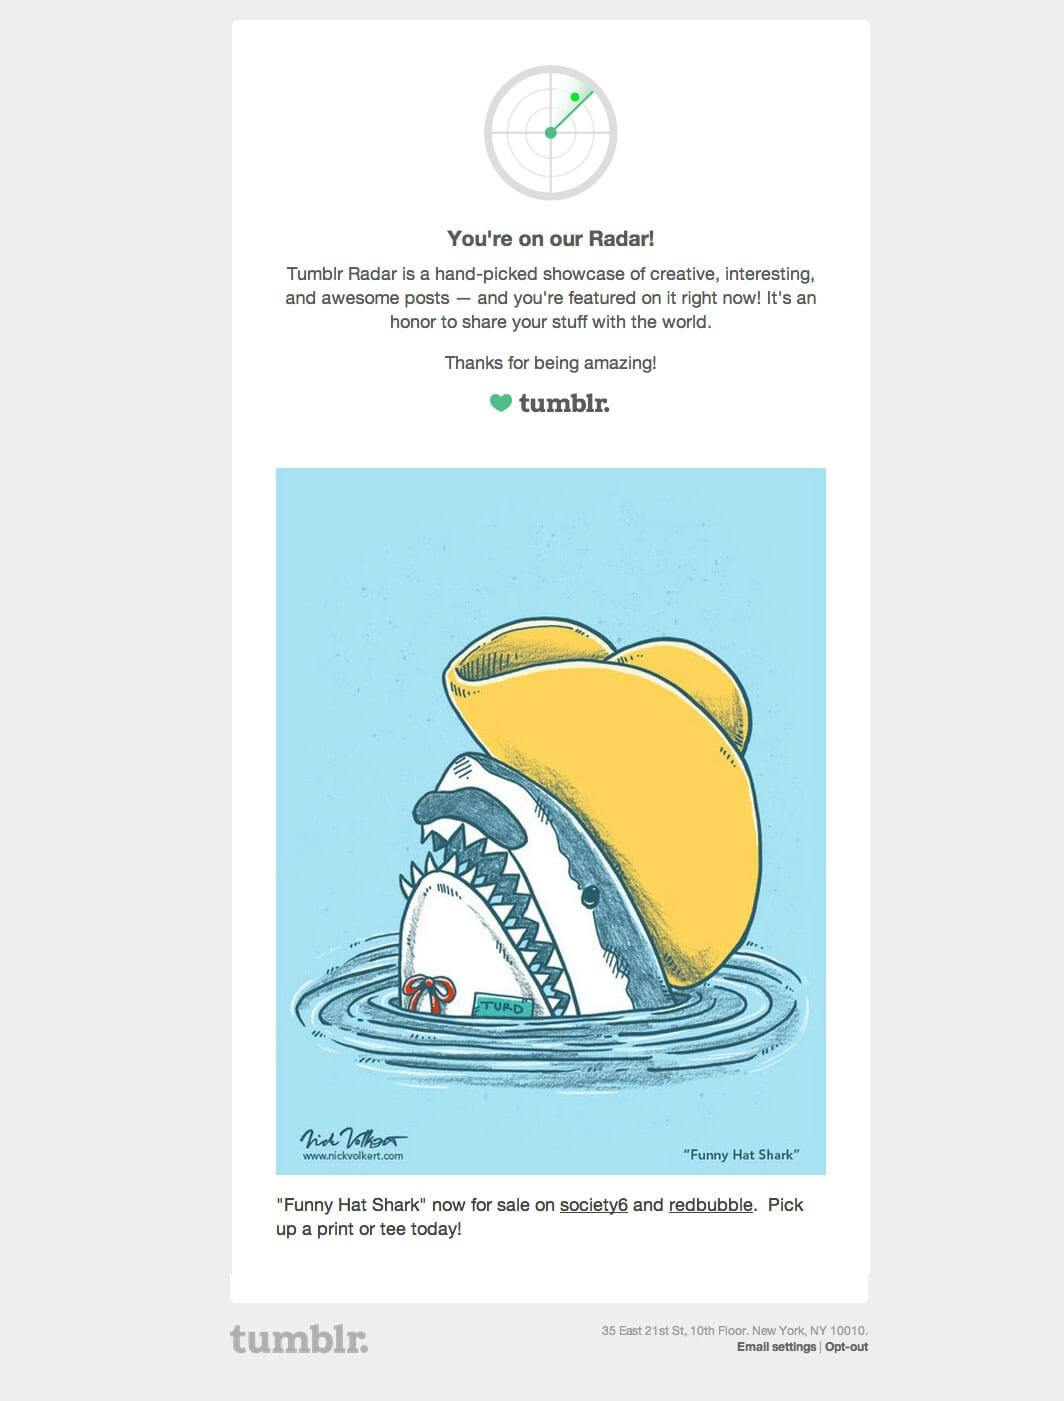 My funny hat shark design went viral on Tumblr